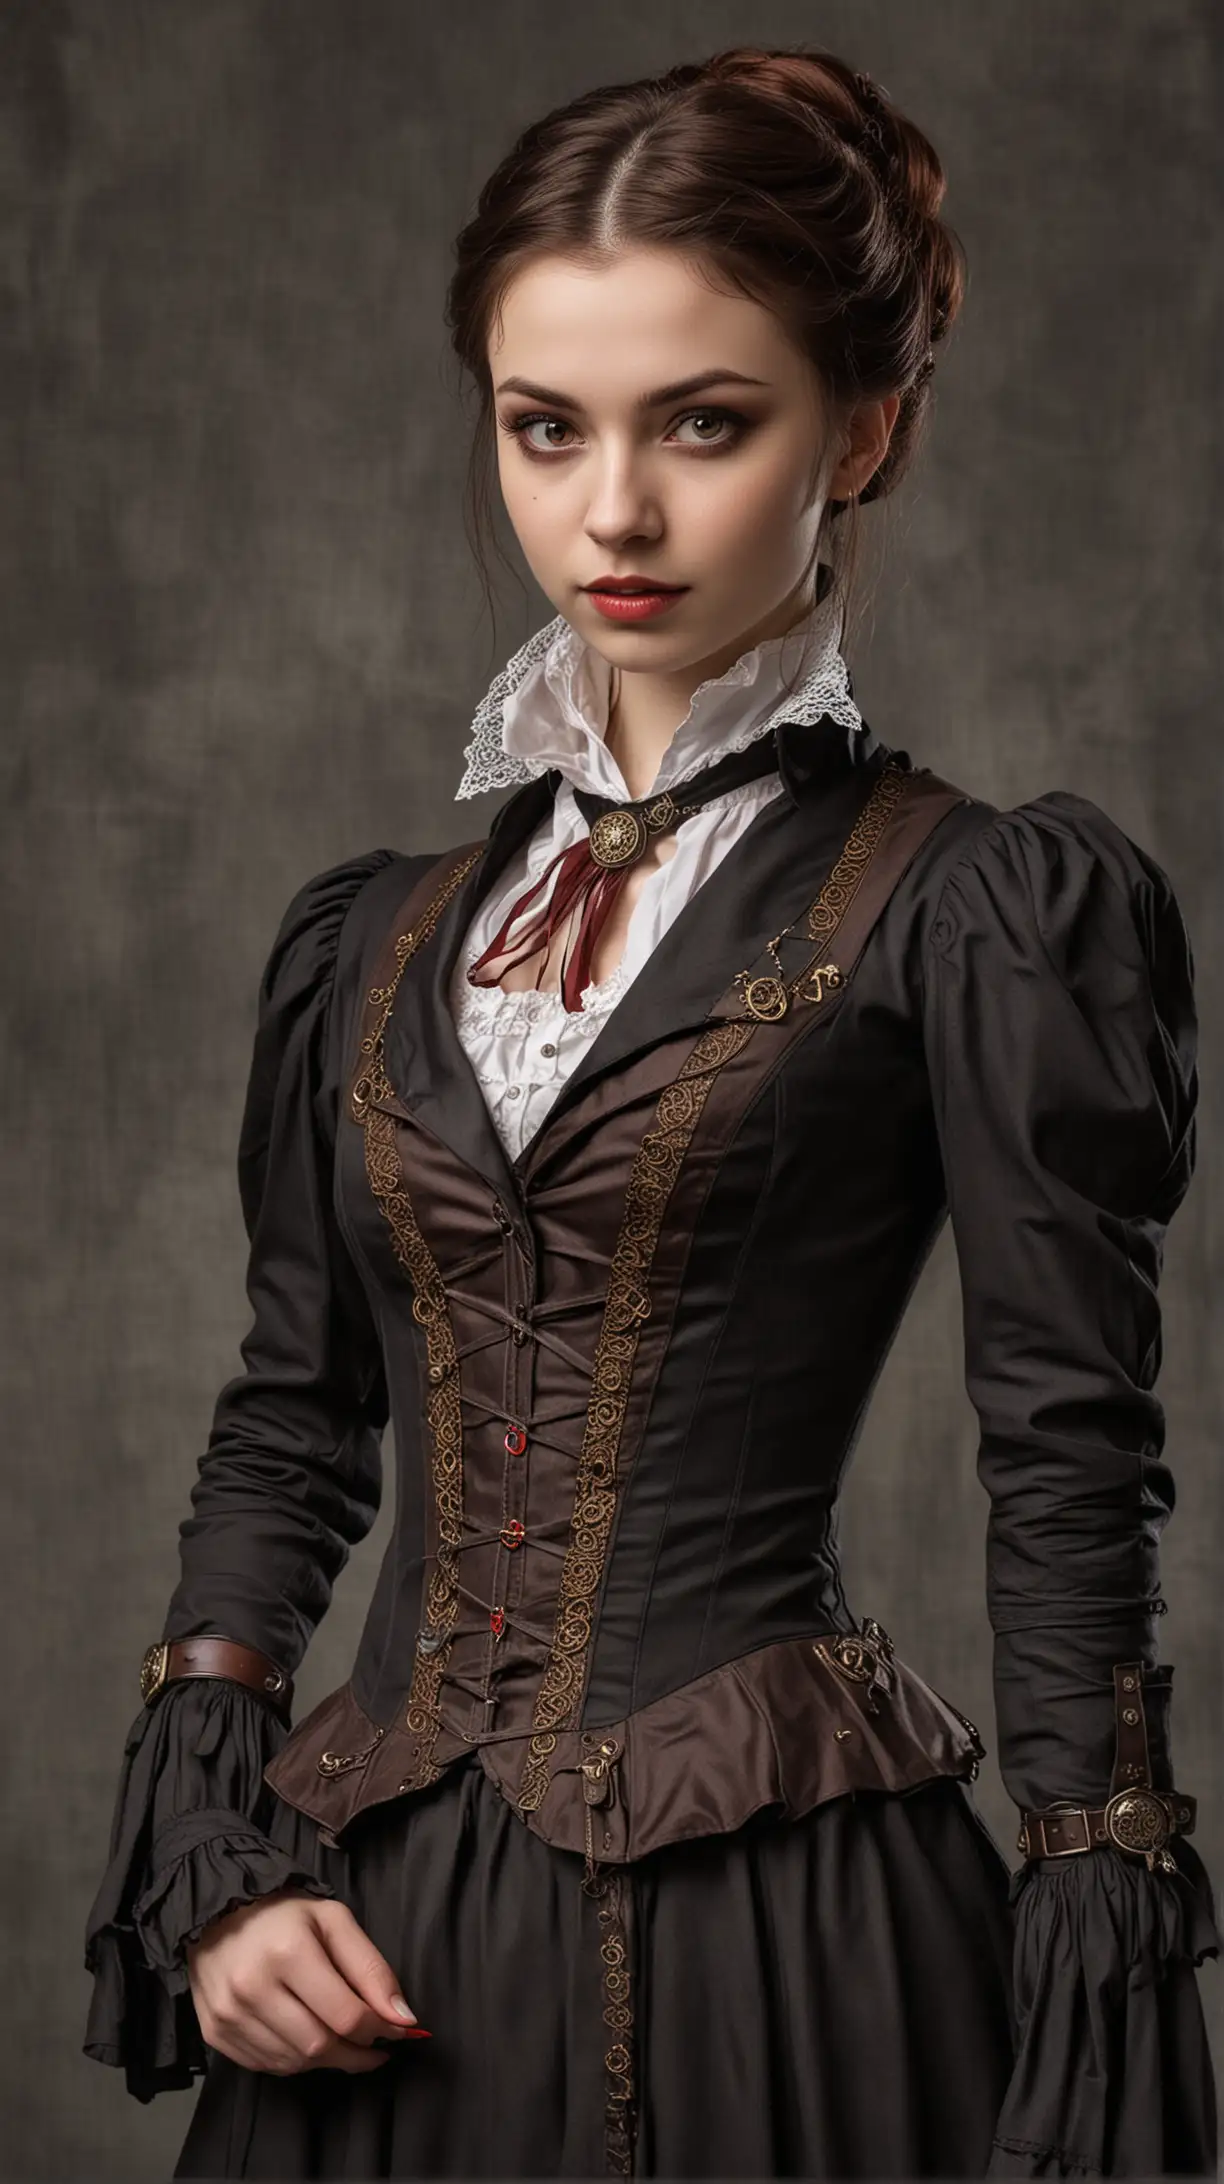 20 year old female vampire, English, steampunk